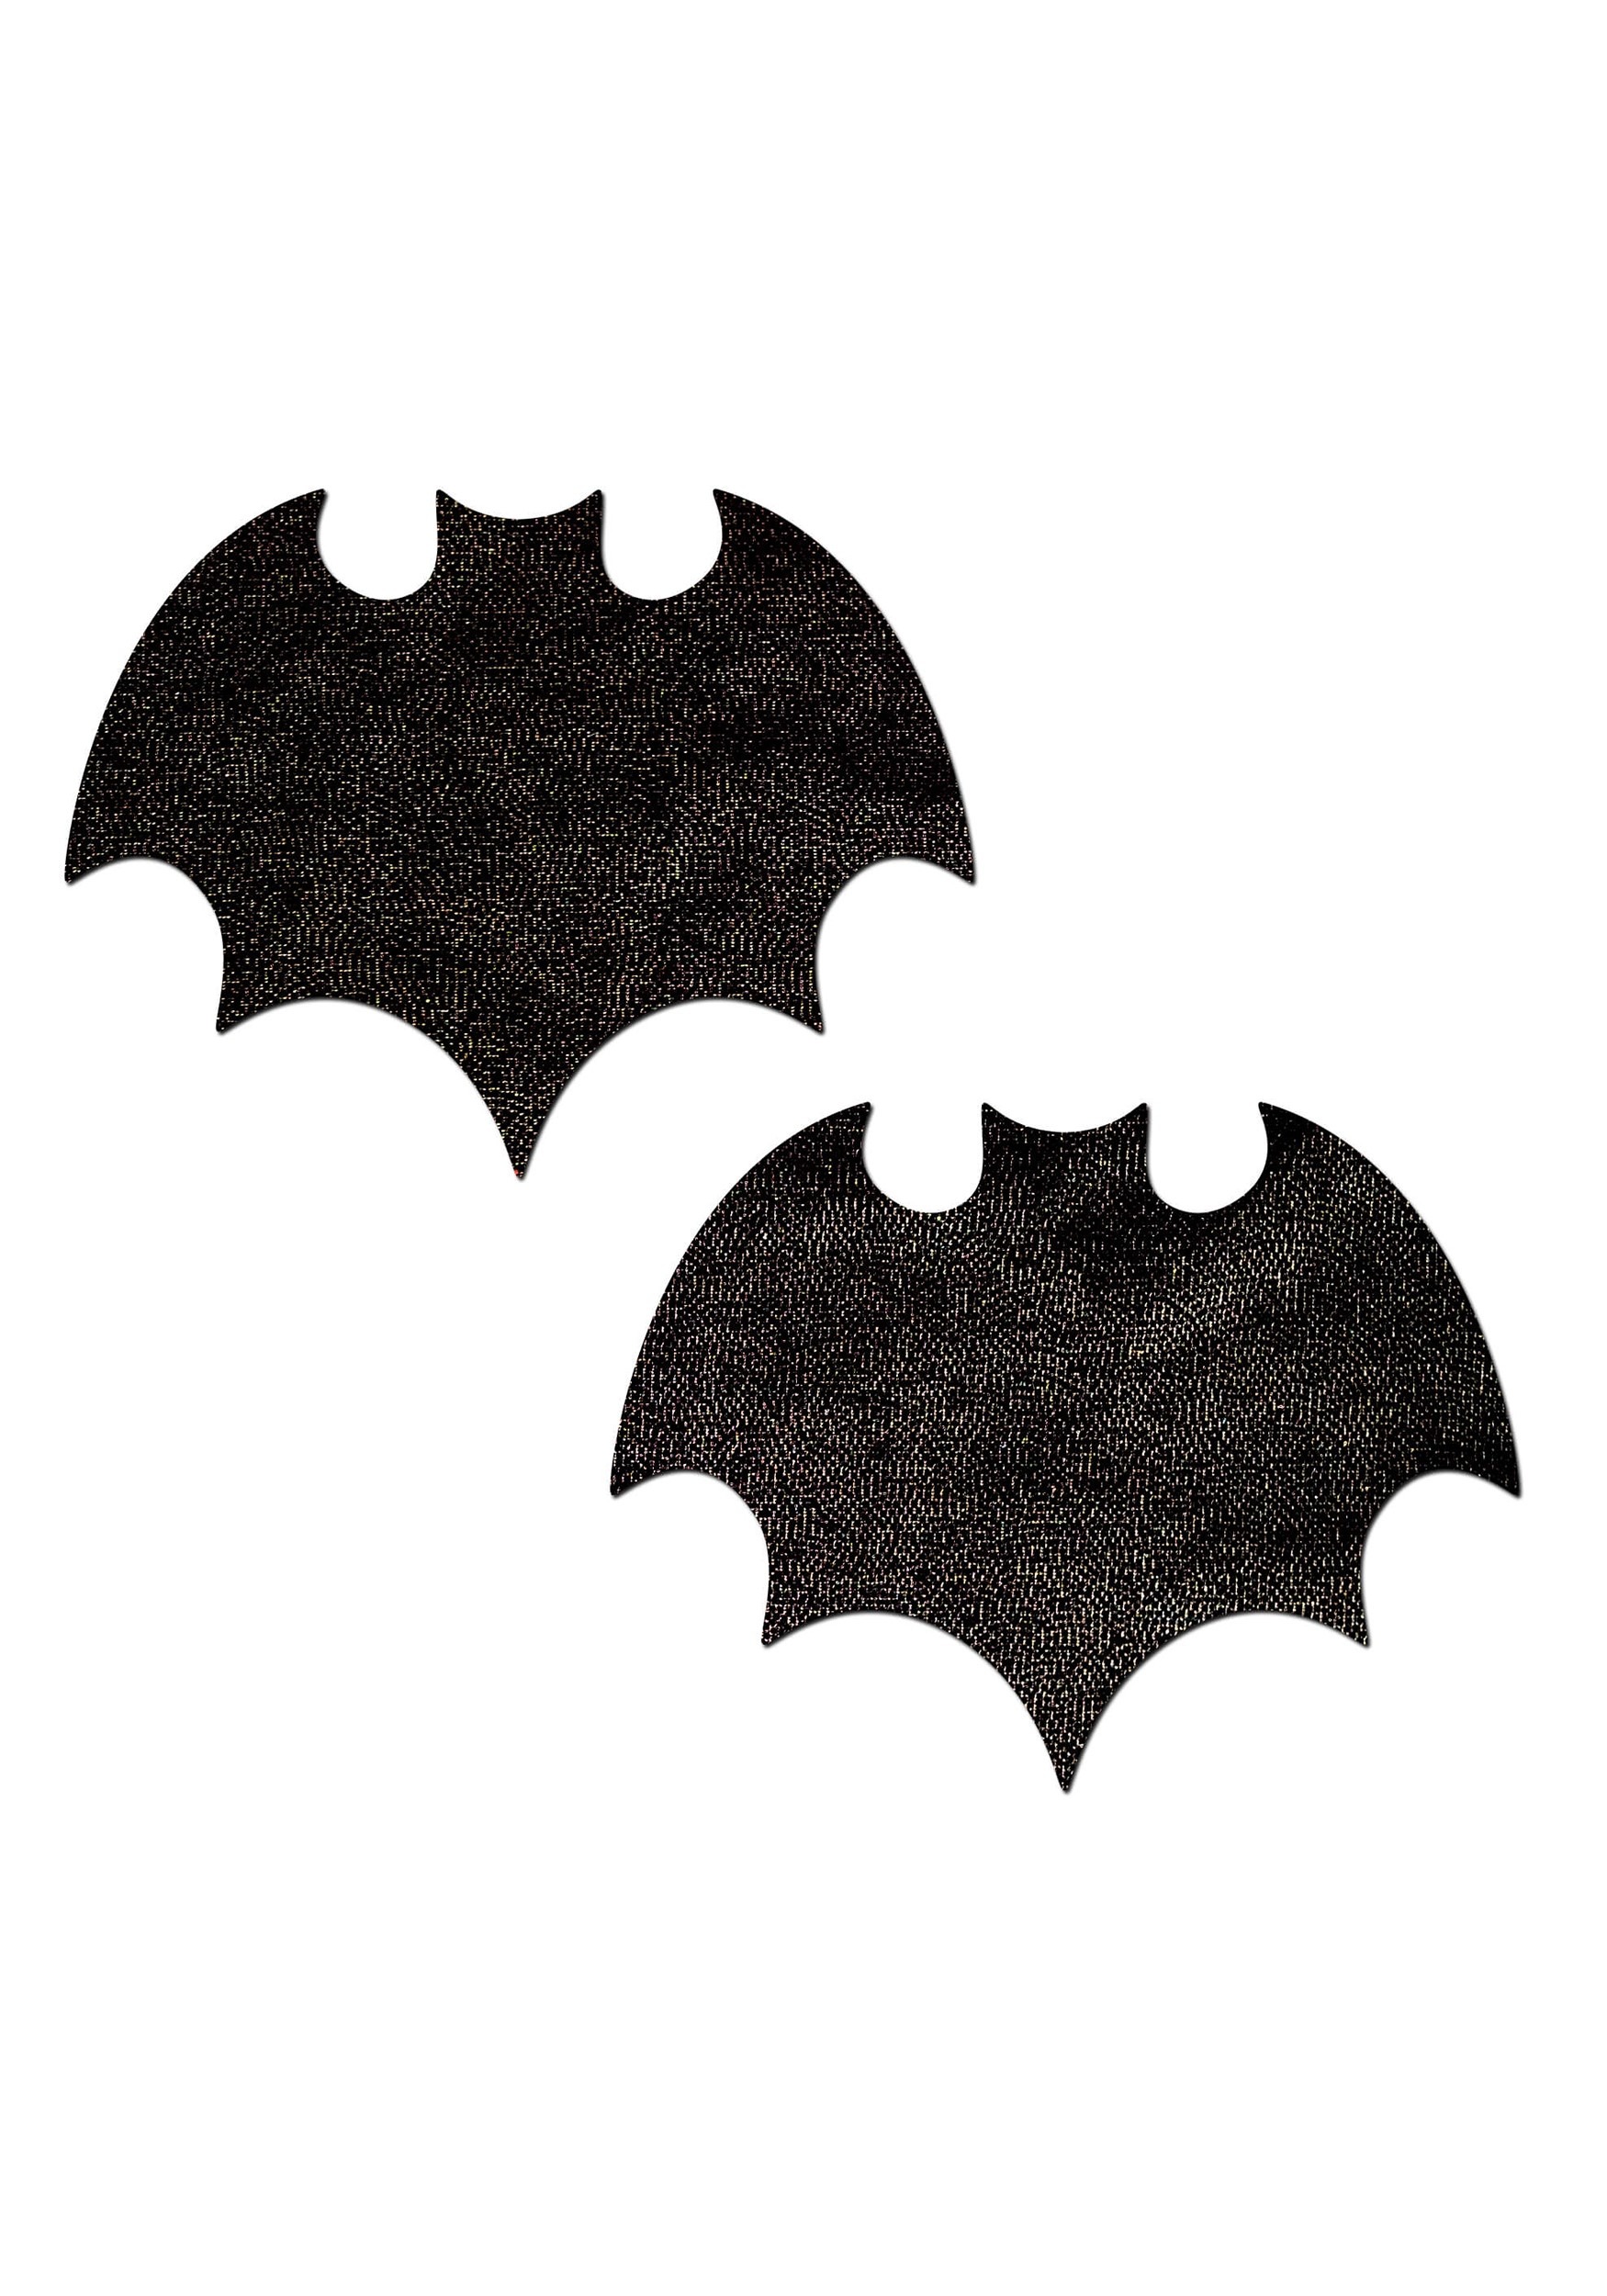 Pastease Black Bat Adult Pasties